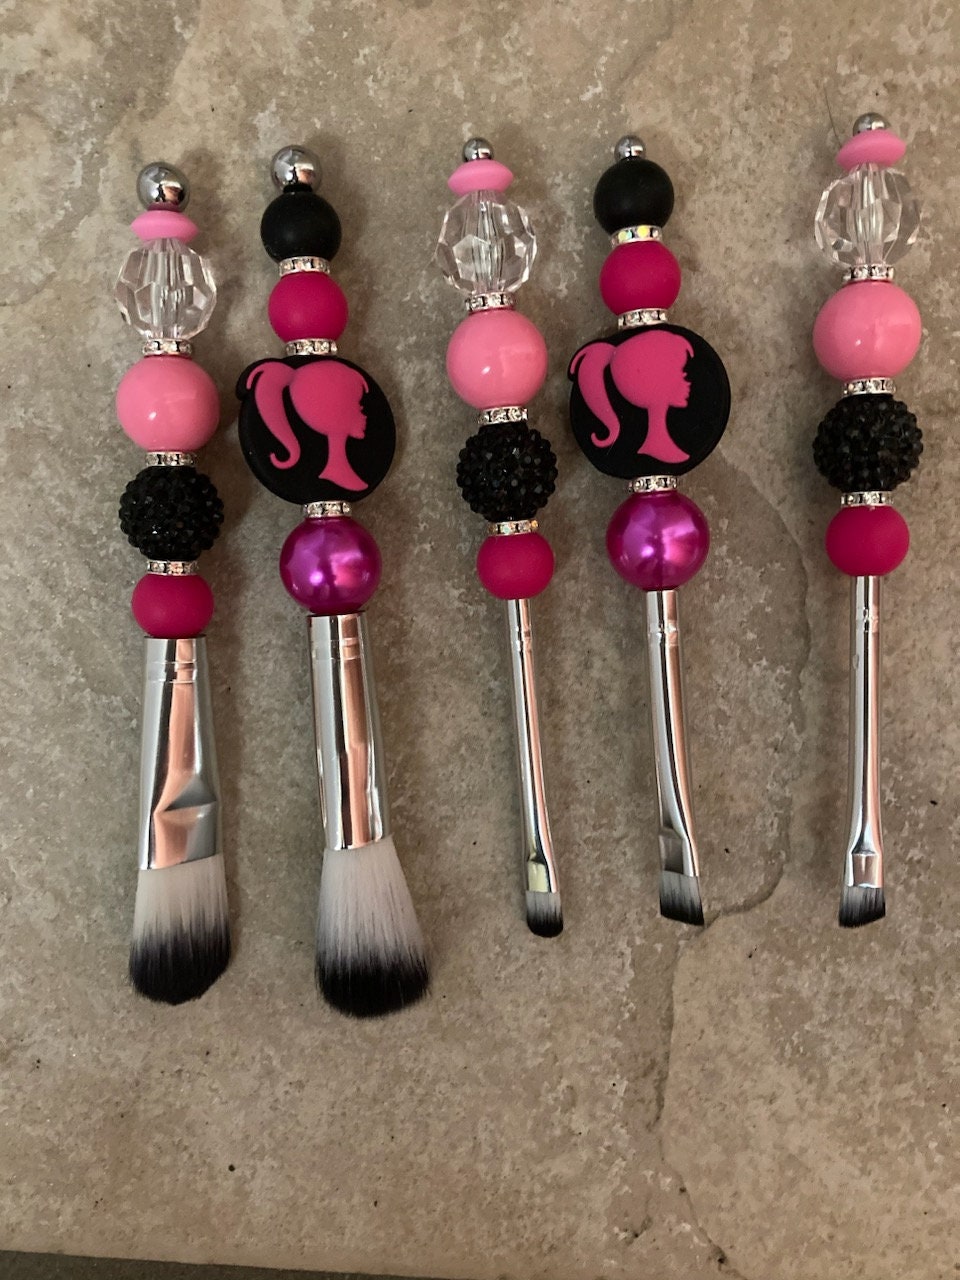 LORYP Glitter Crystal Makeup Brushes Sets -13pcs Cosmetic Brushes Set-Bling  Rhinestone Rose Gold Makeup Brushes Set for Lady (Crystal-Rose Gold)